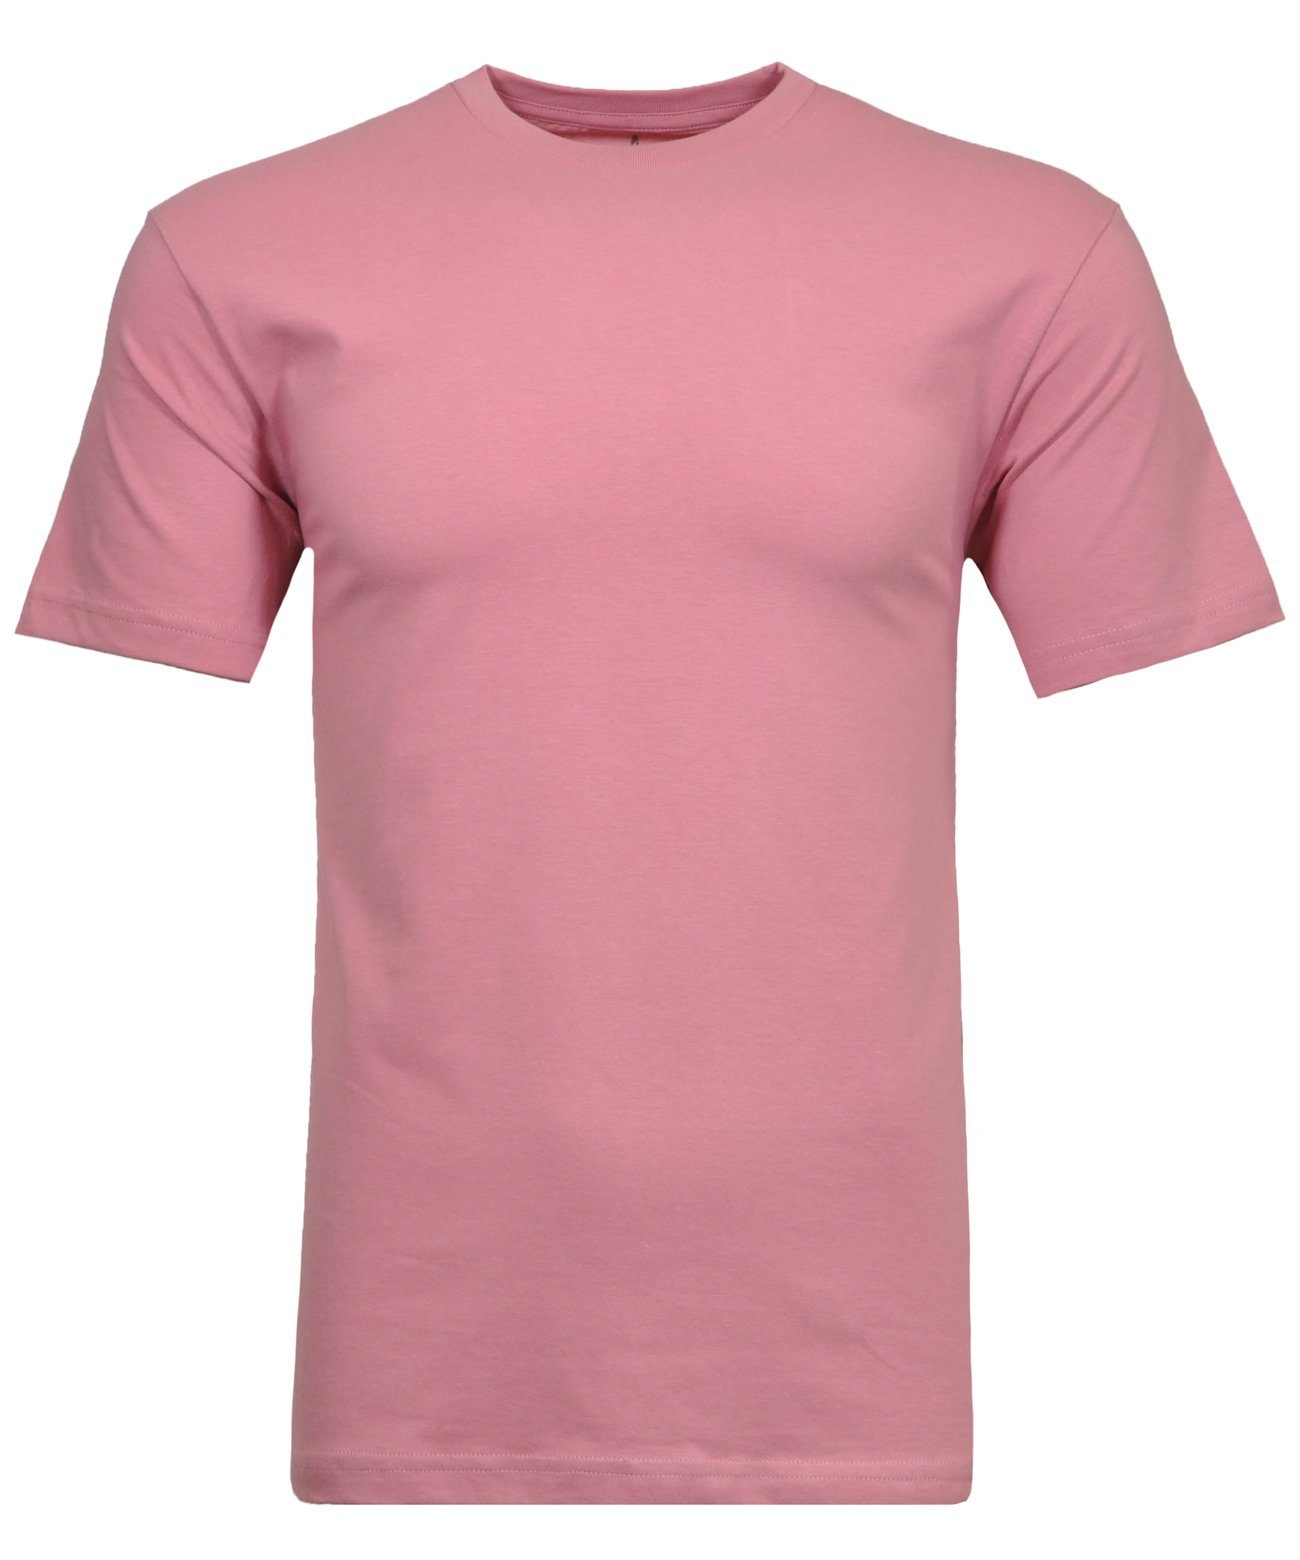 Longshirt Pink-641 RAGMAN